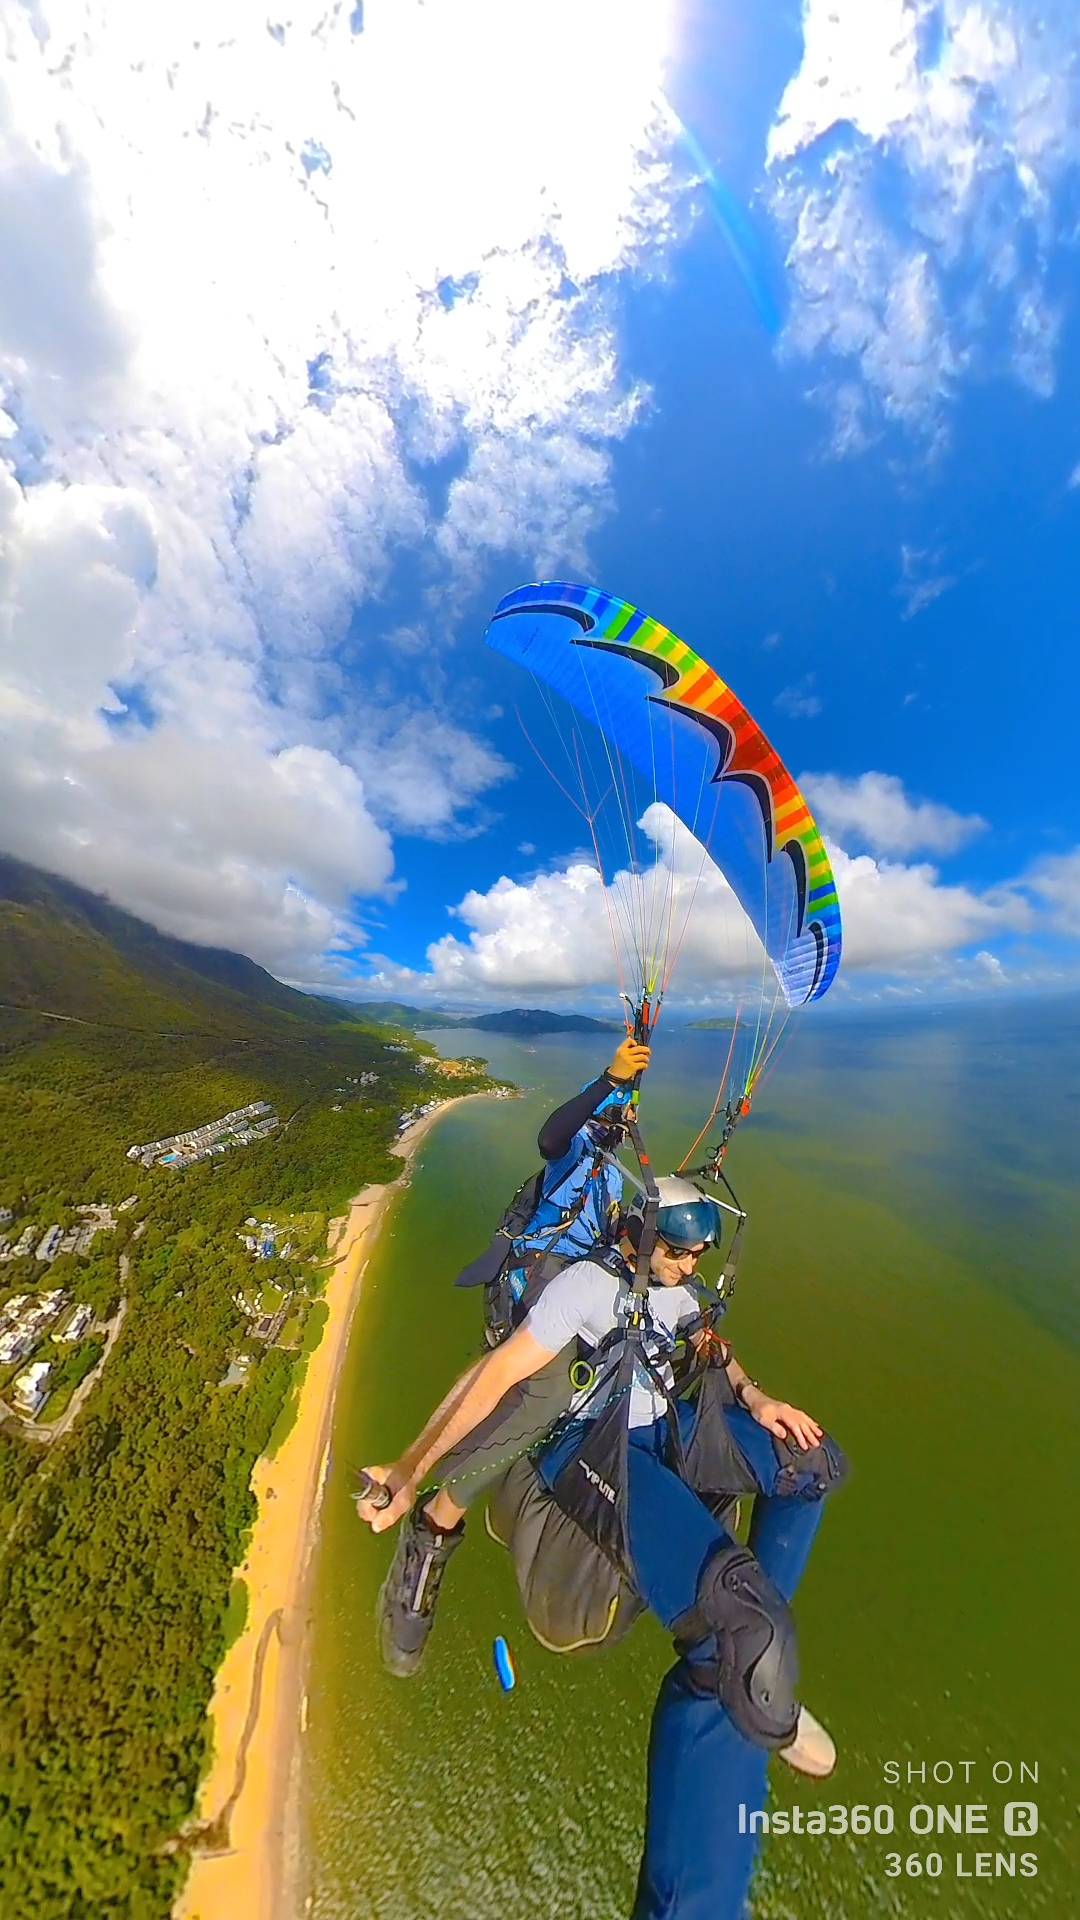 XFLY Paragliding Club 【特別體驗之選】香港滑翔傘體驗飛行 Tandem paragliding experience trial 7